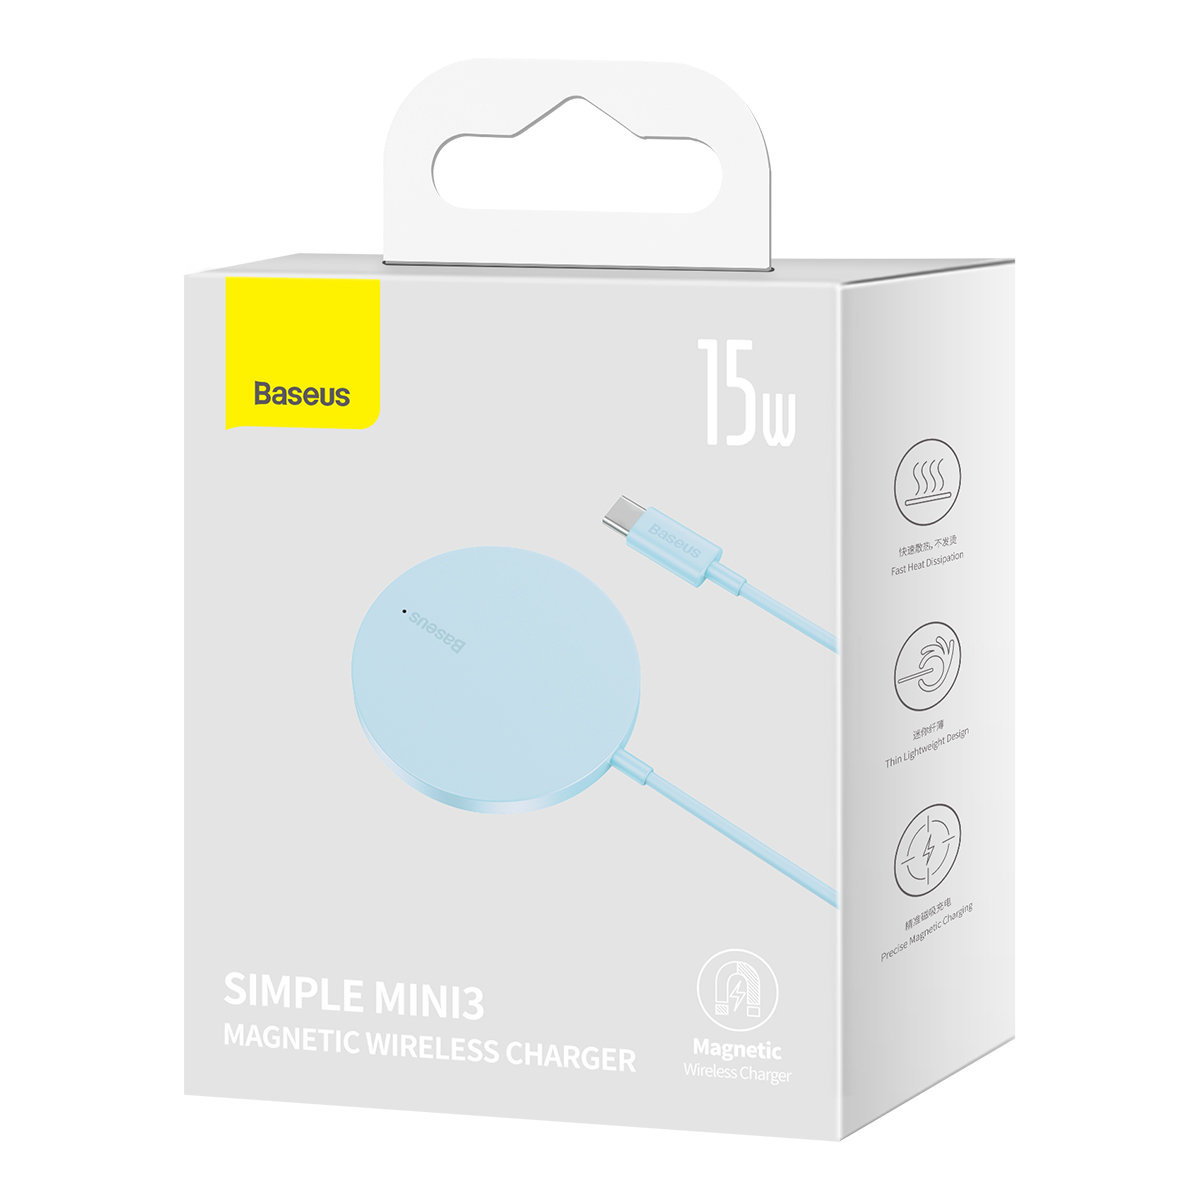 Baseus Simple Mini3 Wireless Charger MagSafe Qi 15W niebieska